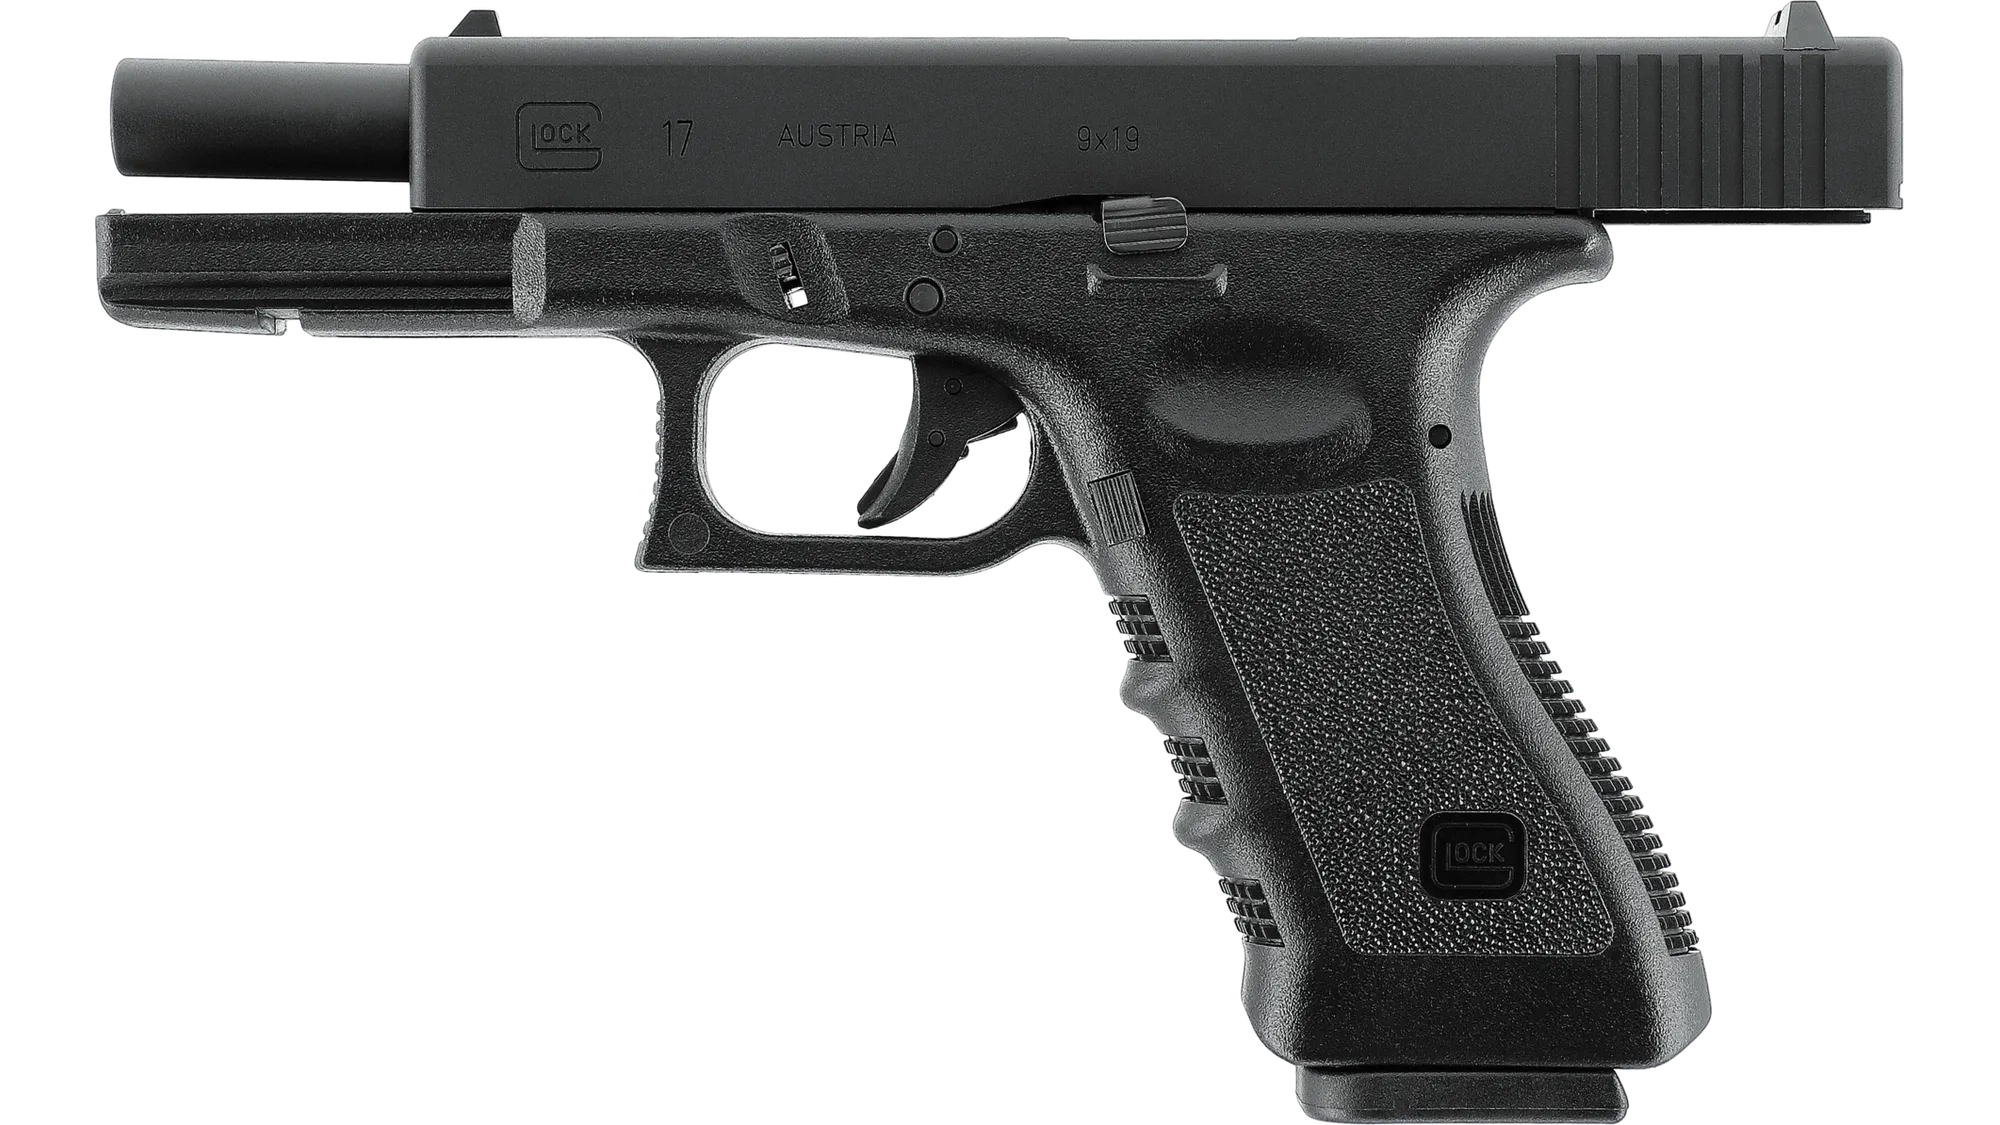 Umarex GHK Glock 17 Gen 3 GBB pistooli, alumiiniluistilla - musta